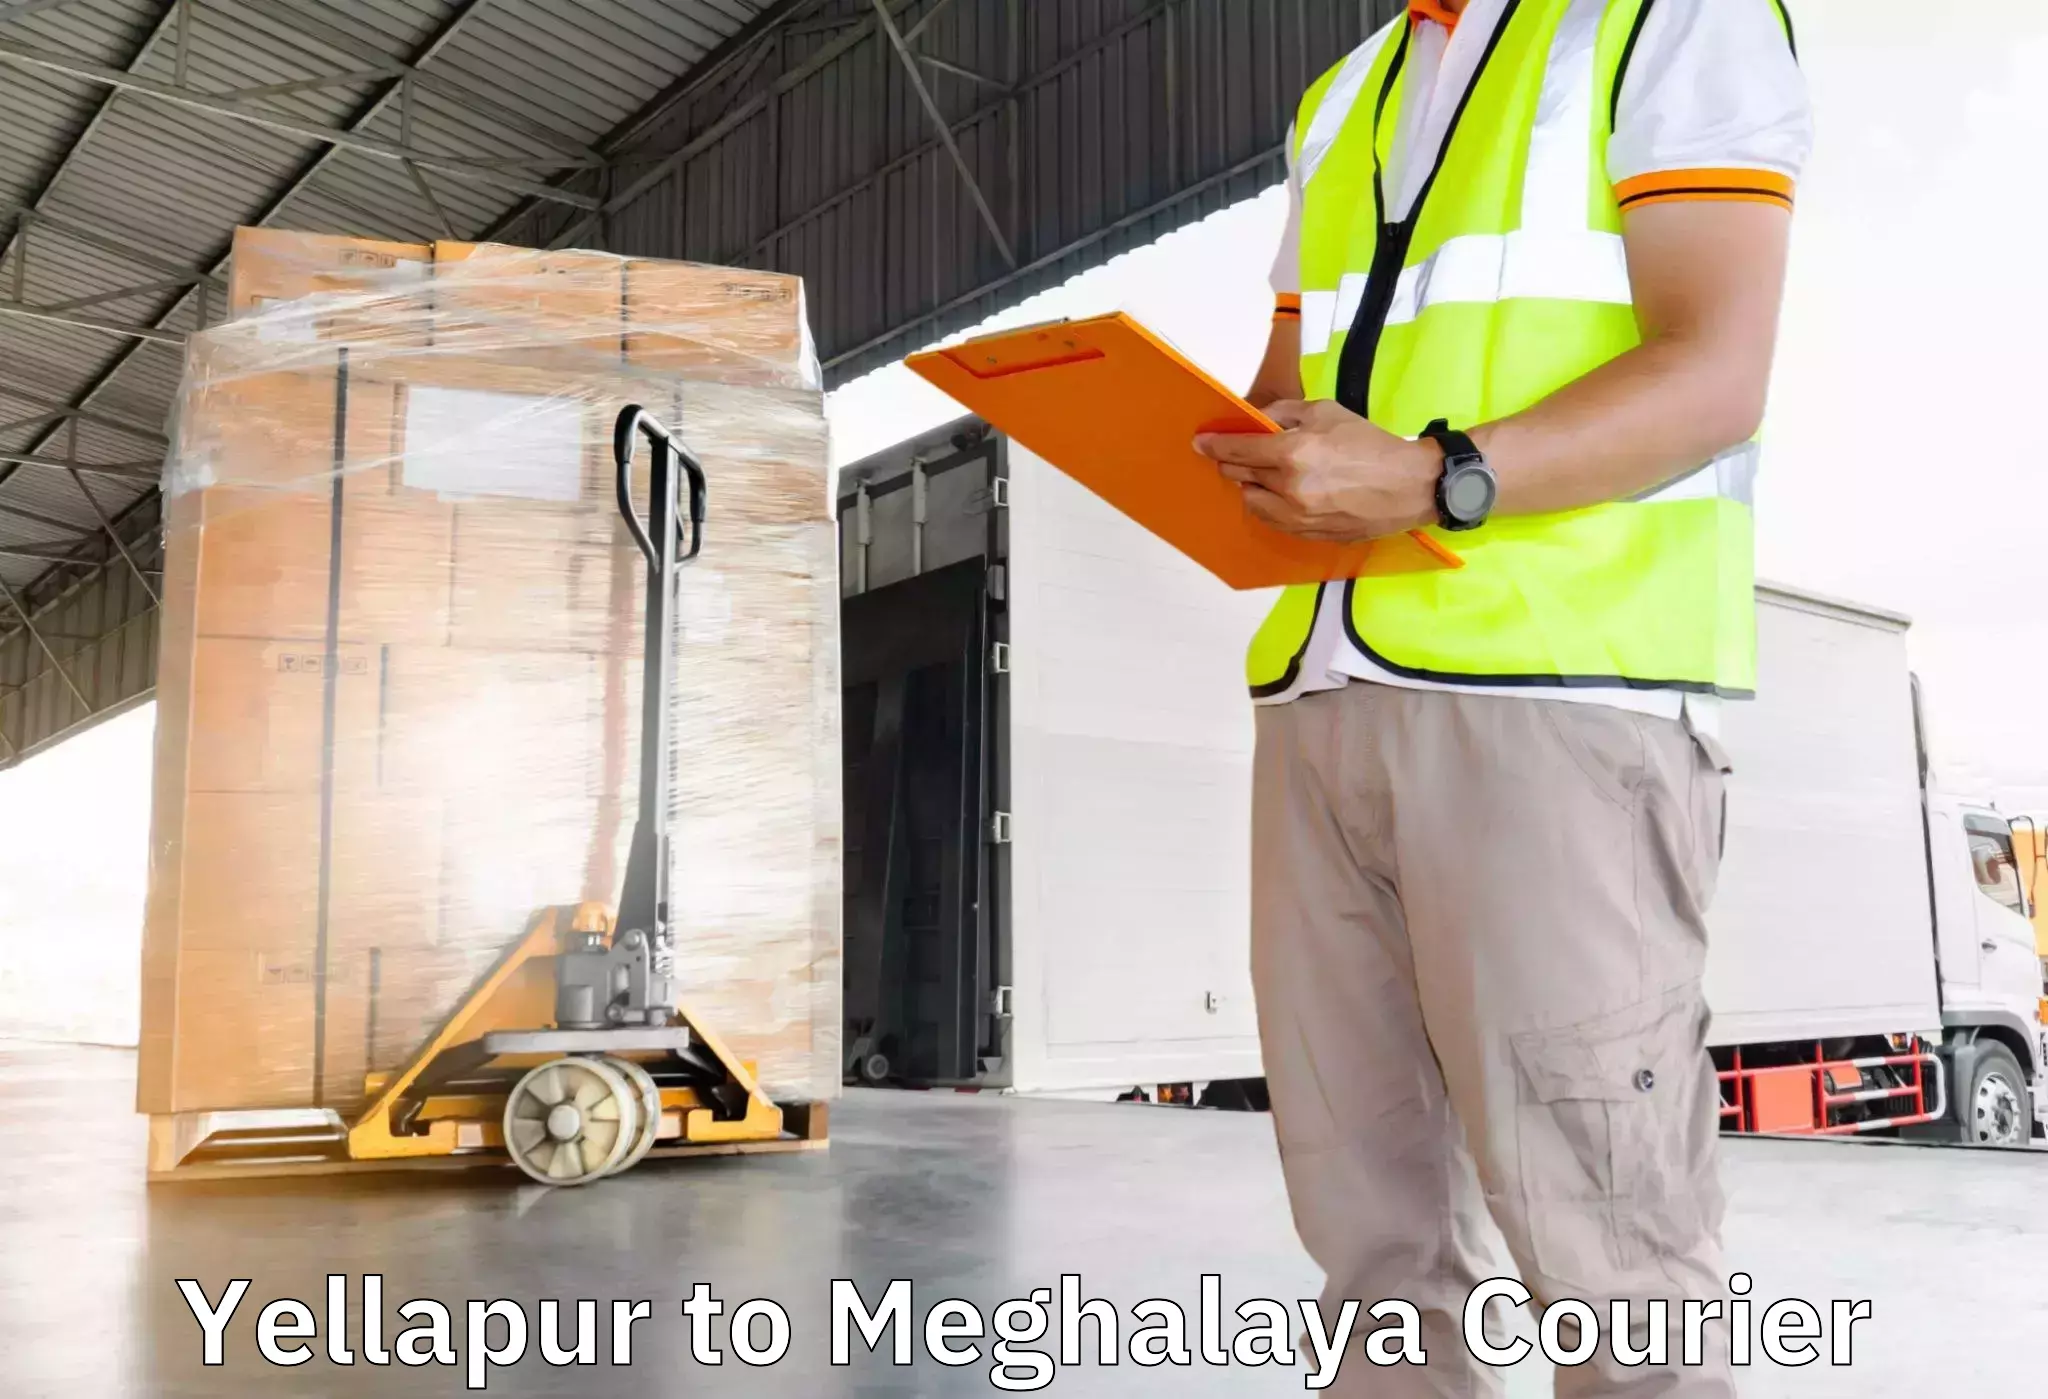 Professional moving company Yellapur to Nongpoh